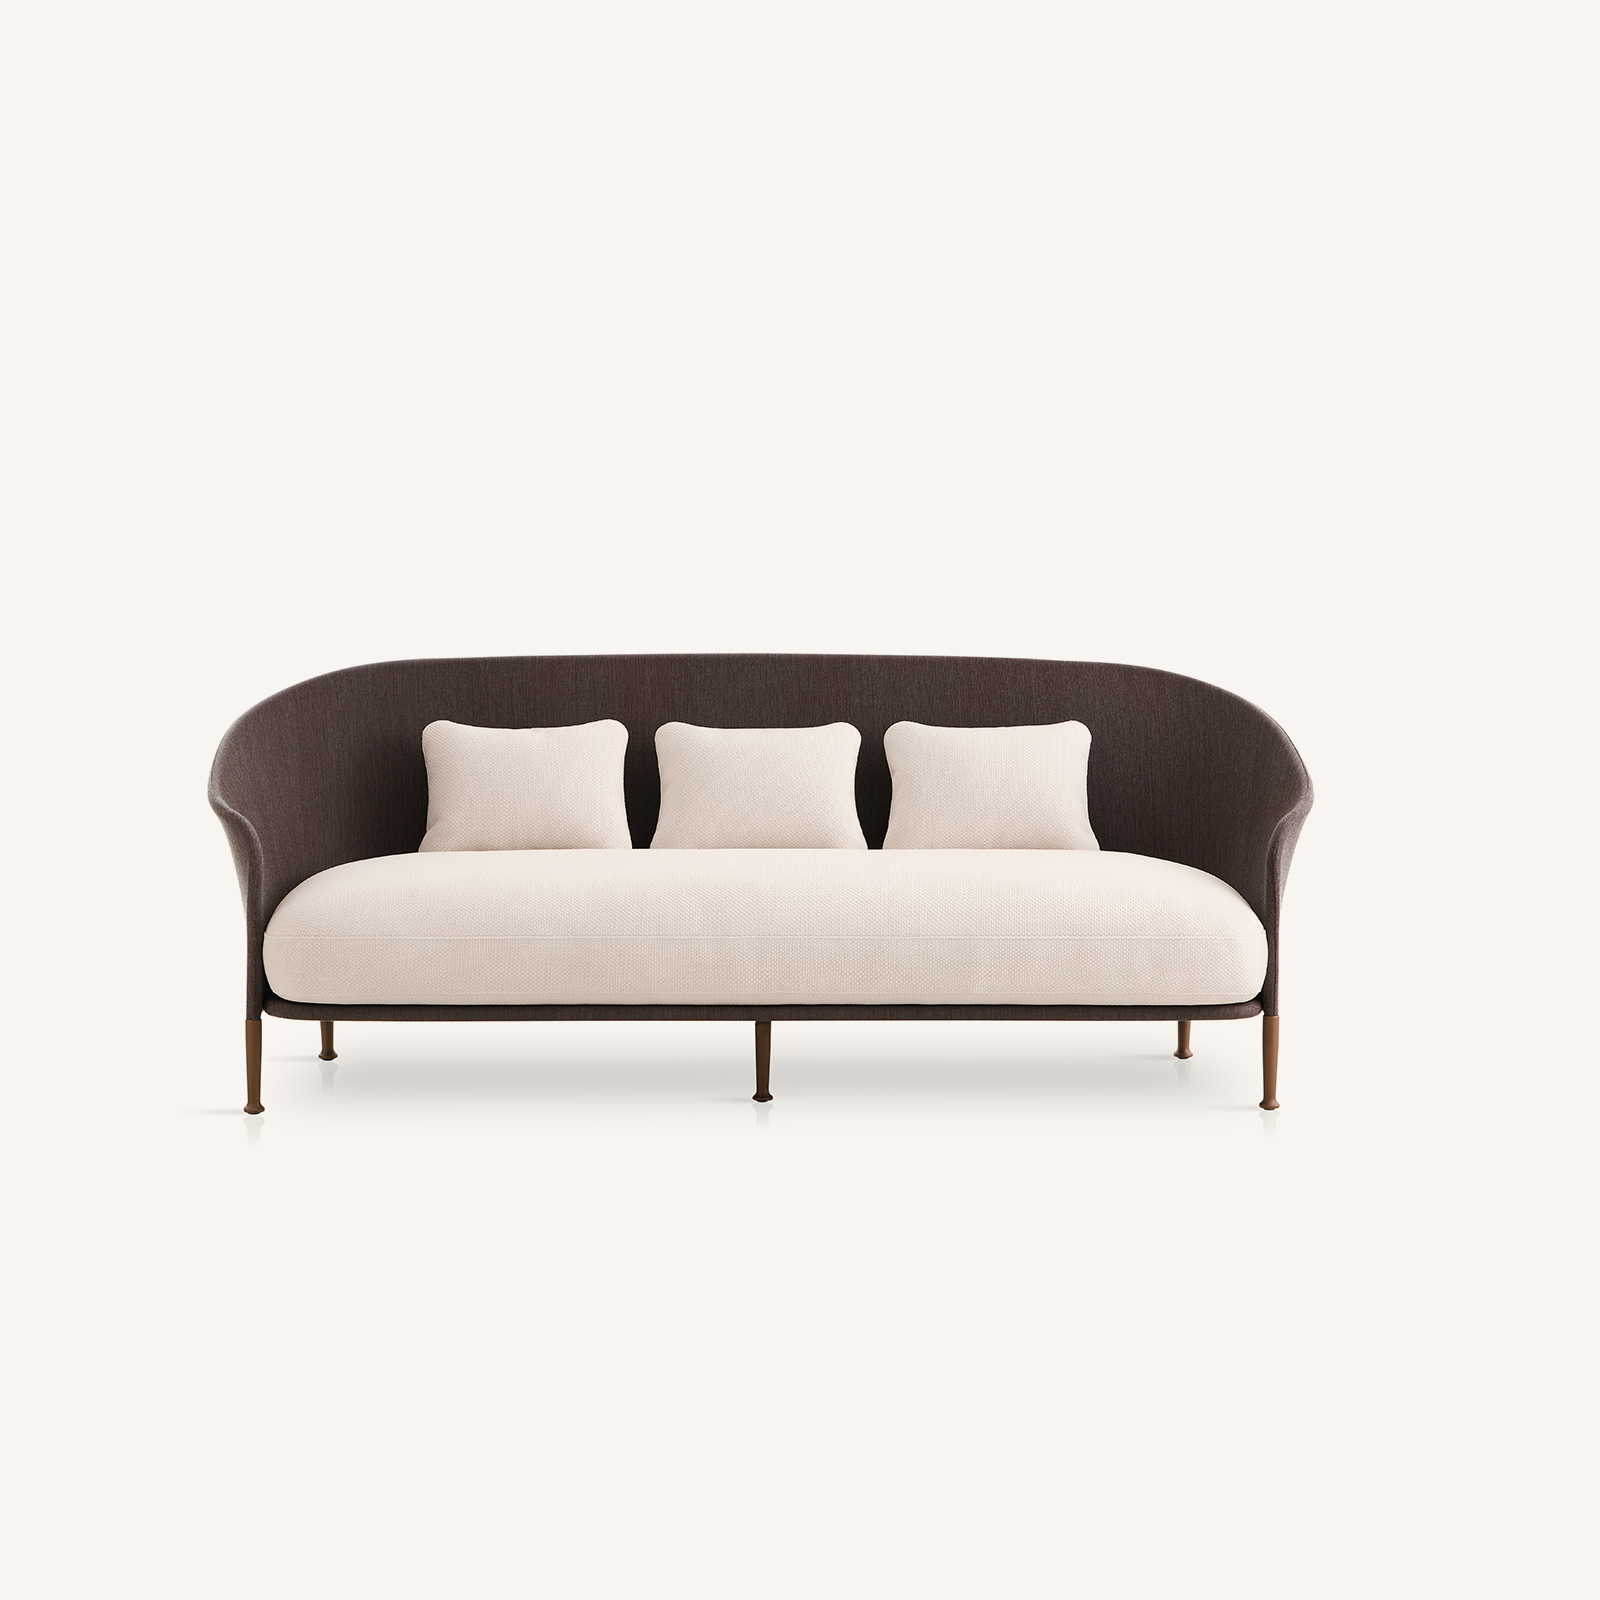 outdoor collection - sofas - liz low sofa